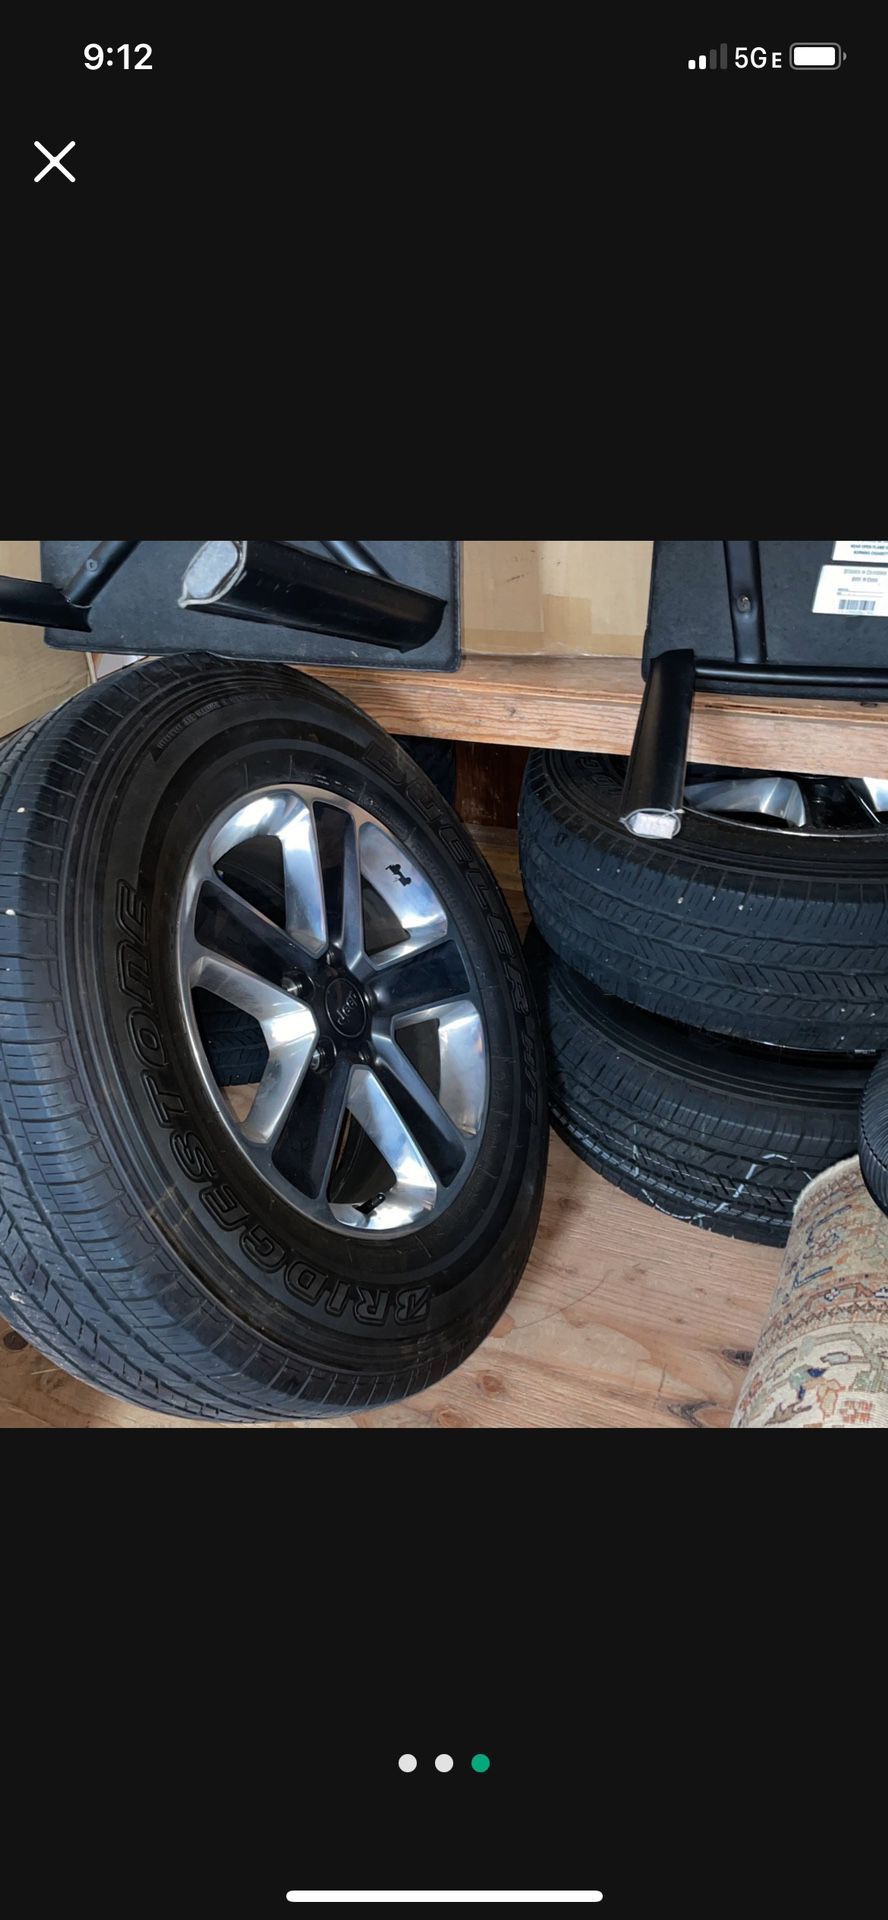 2018 Jeep Sahara Rims And Wheel